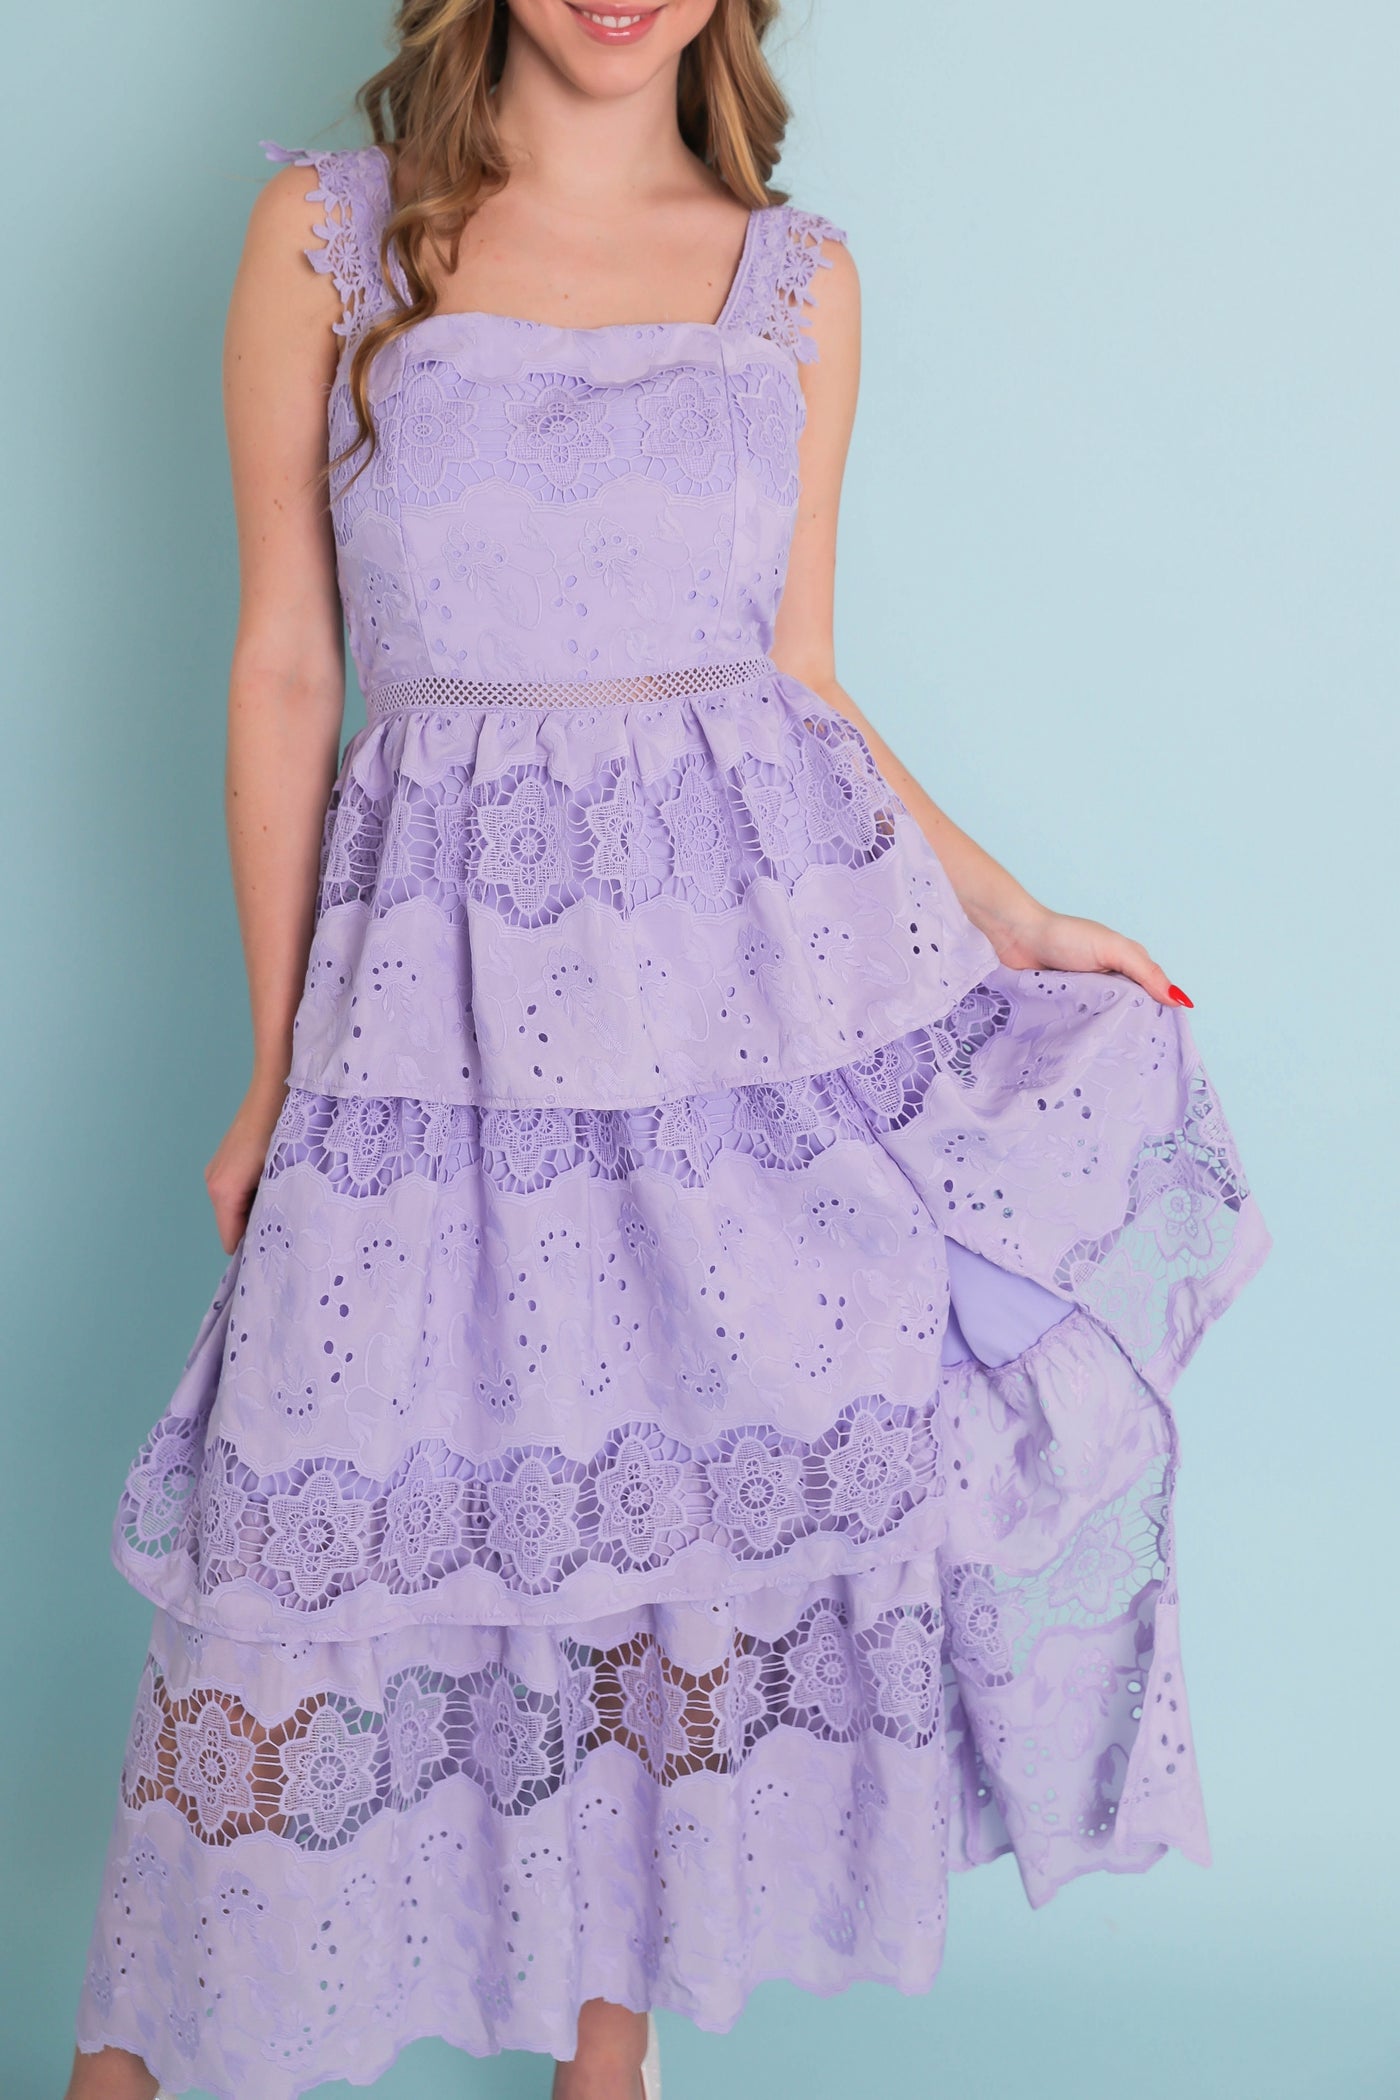 Lavender Floral Embroidered Midi Dress- Women's Purple Lace Dress- Just Me Dresses